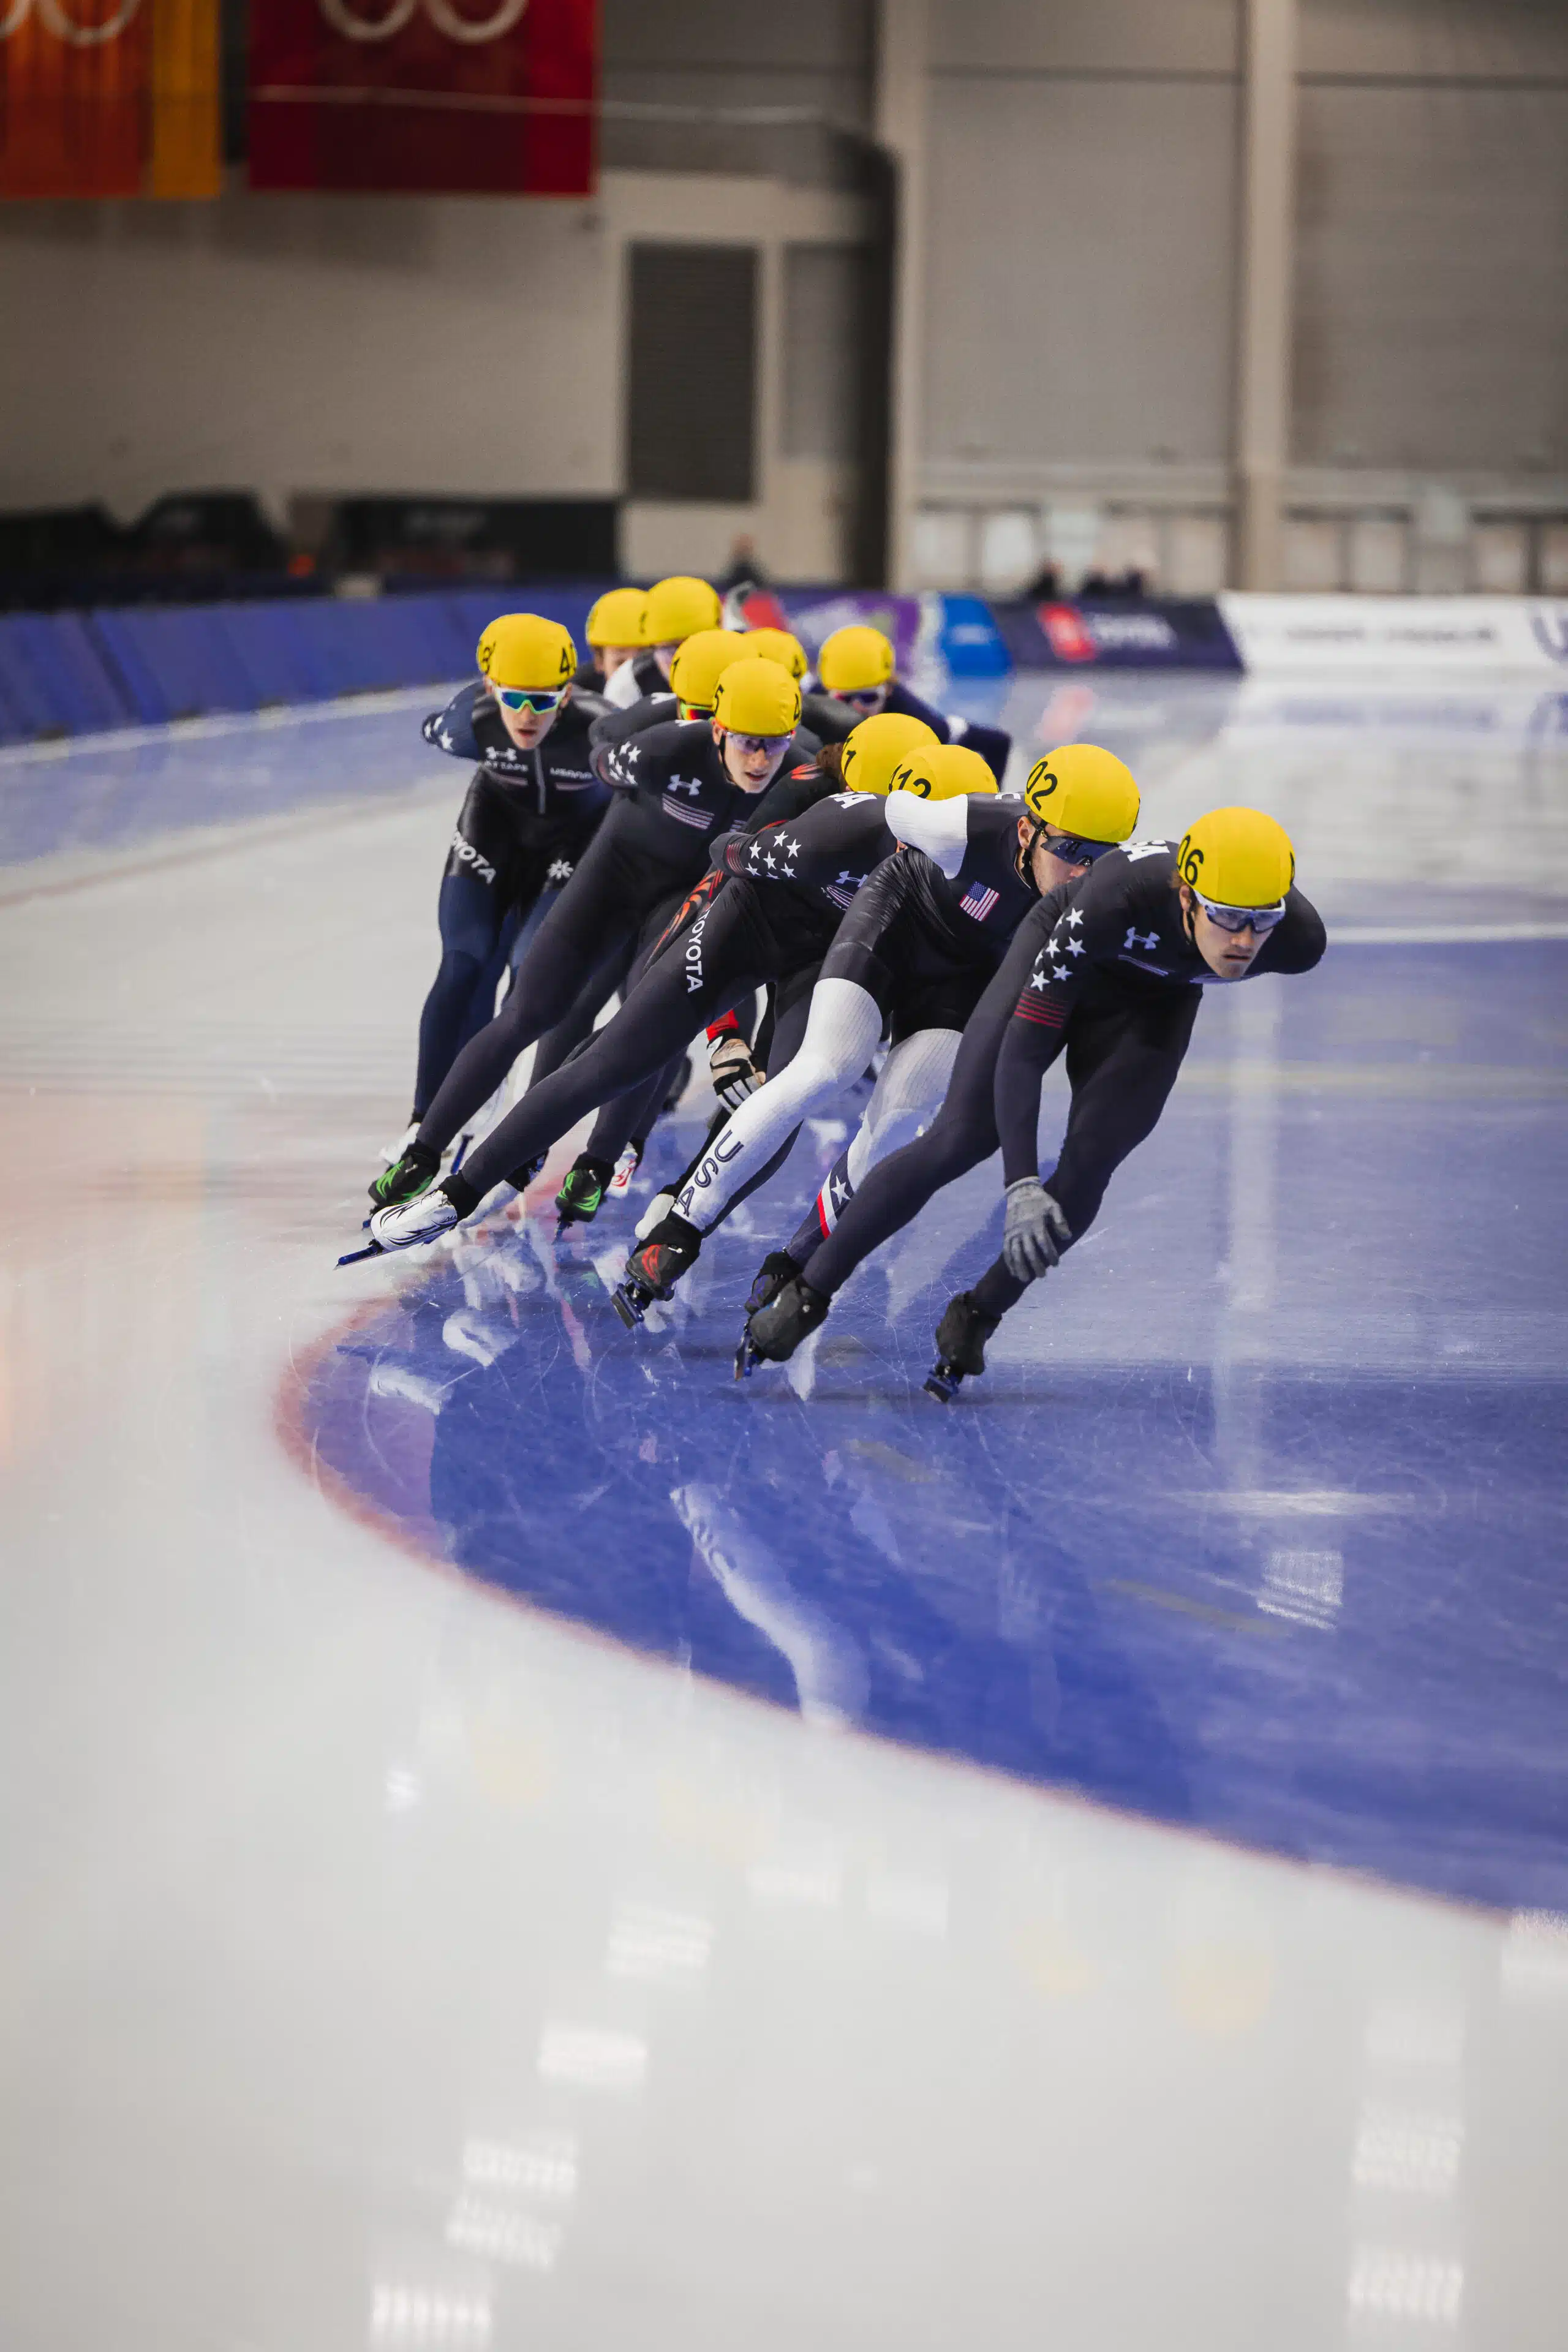 speedskating on ice yellow helmets black suits